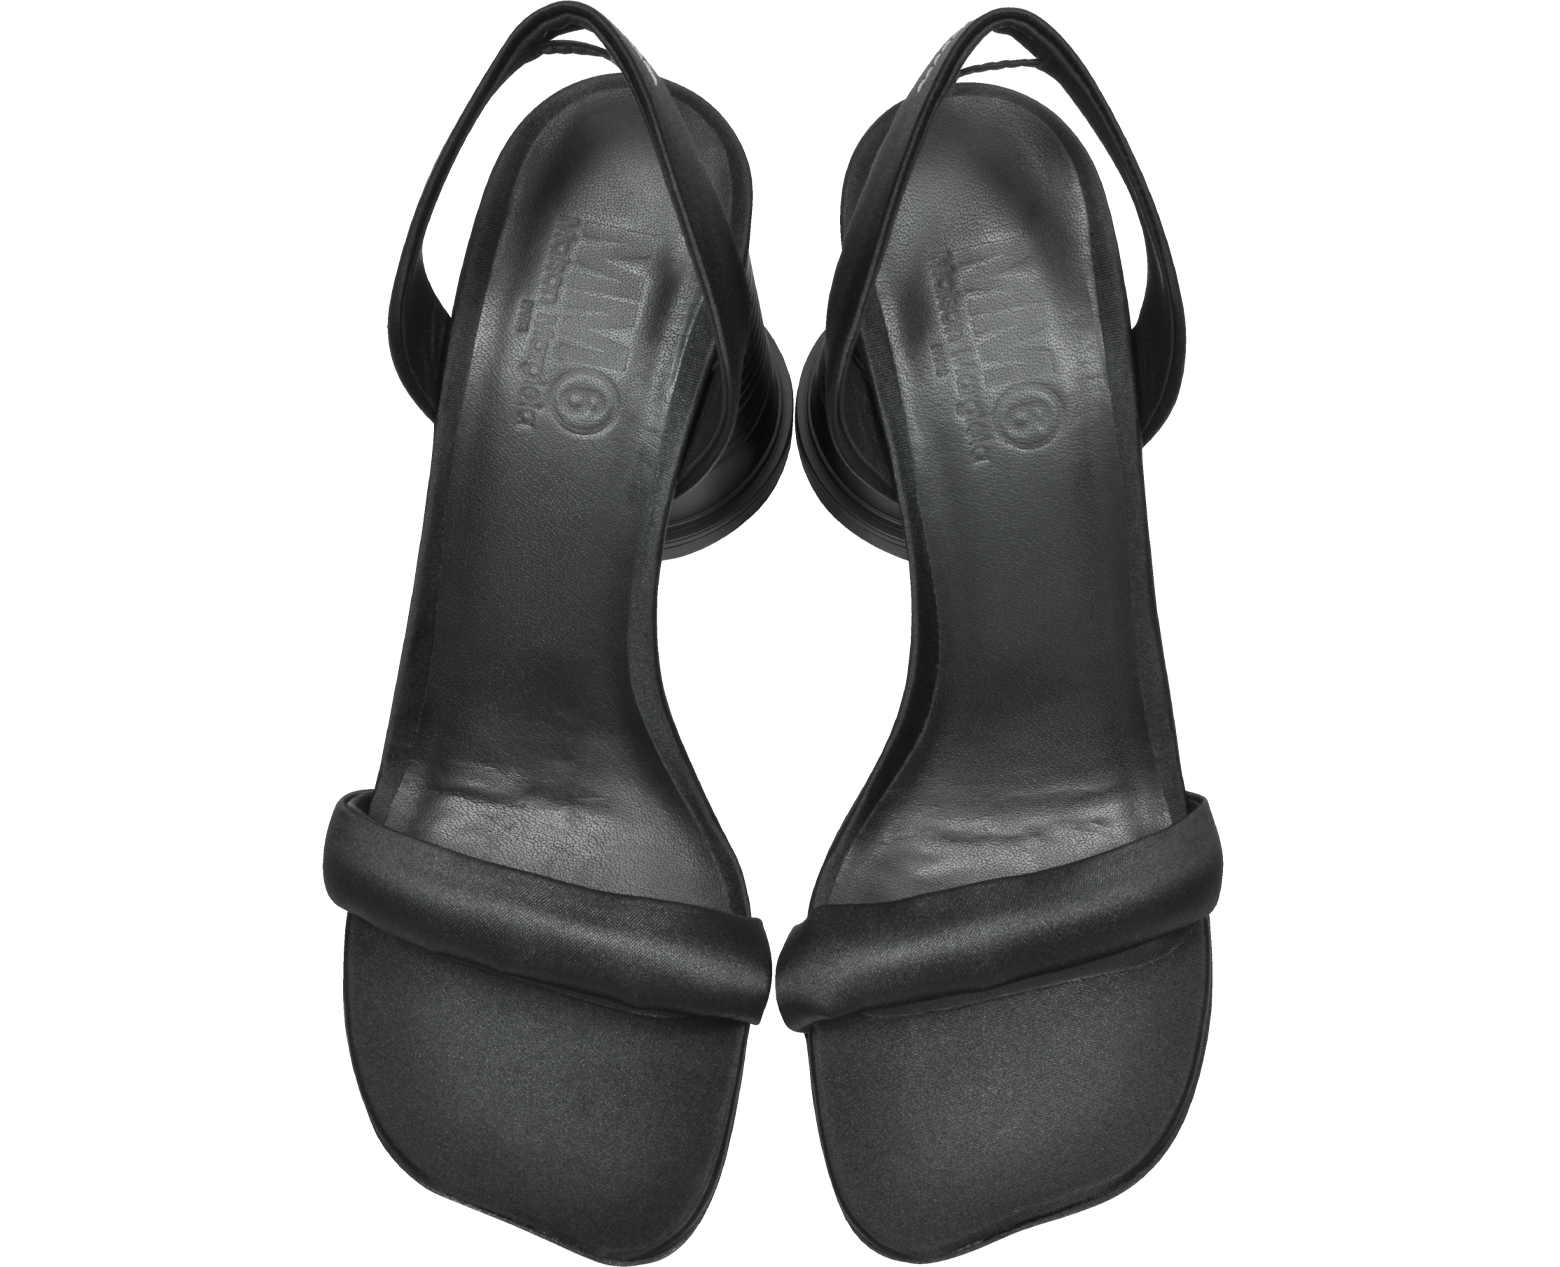 MM6 Maison Martin Margiela Black Satin Sandals w/Plastic Cup Heel 36 IT ...